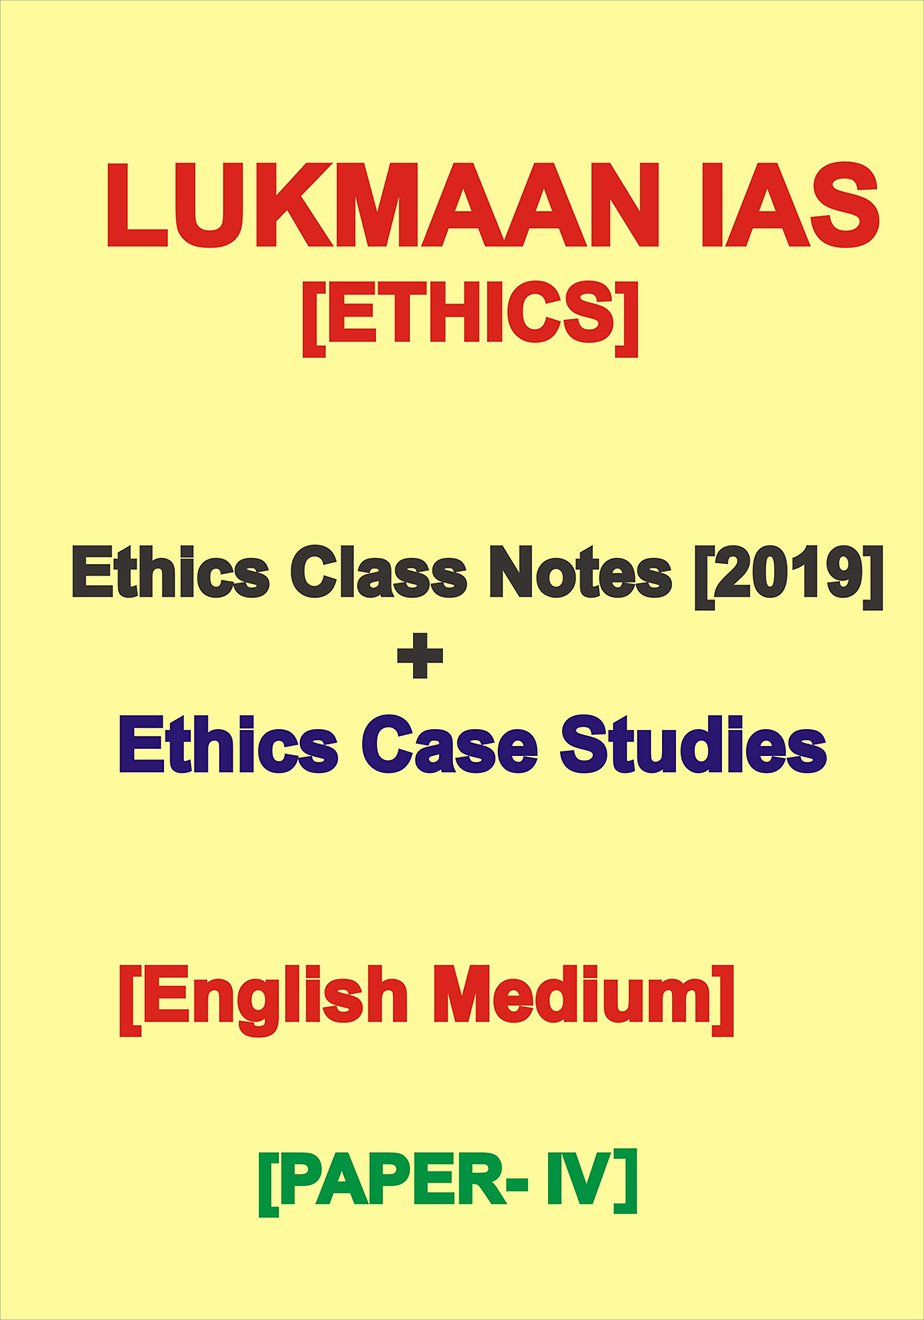 Lukmaan IAS Ethics Notes PDF